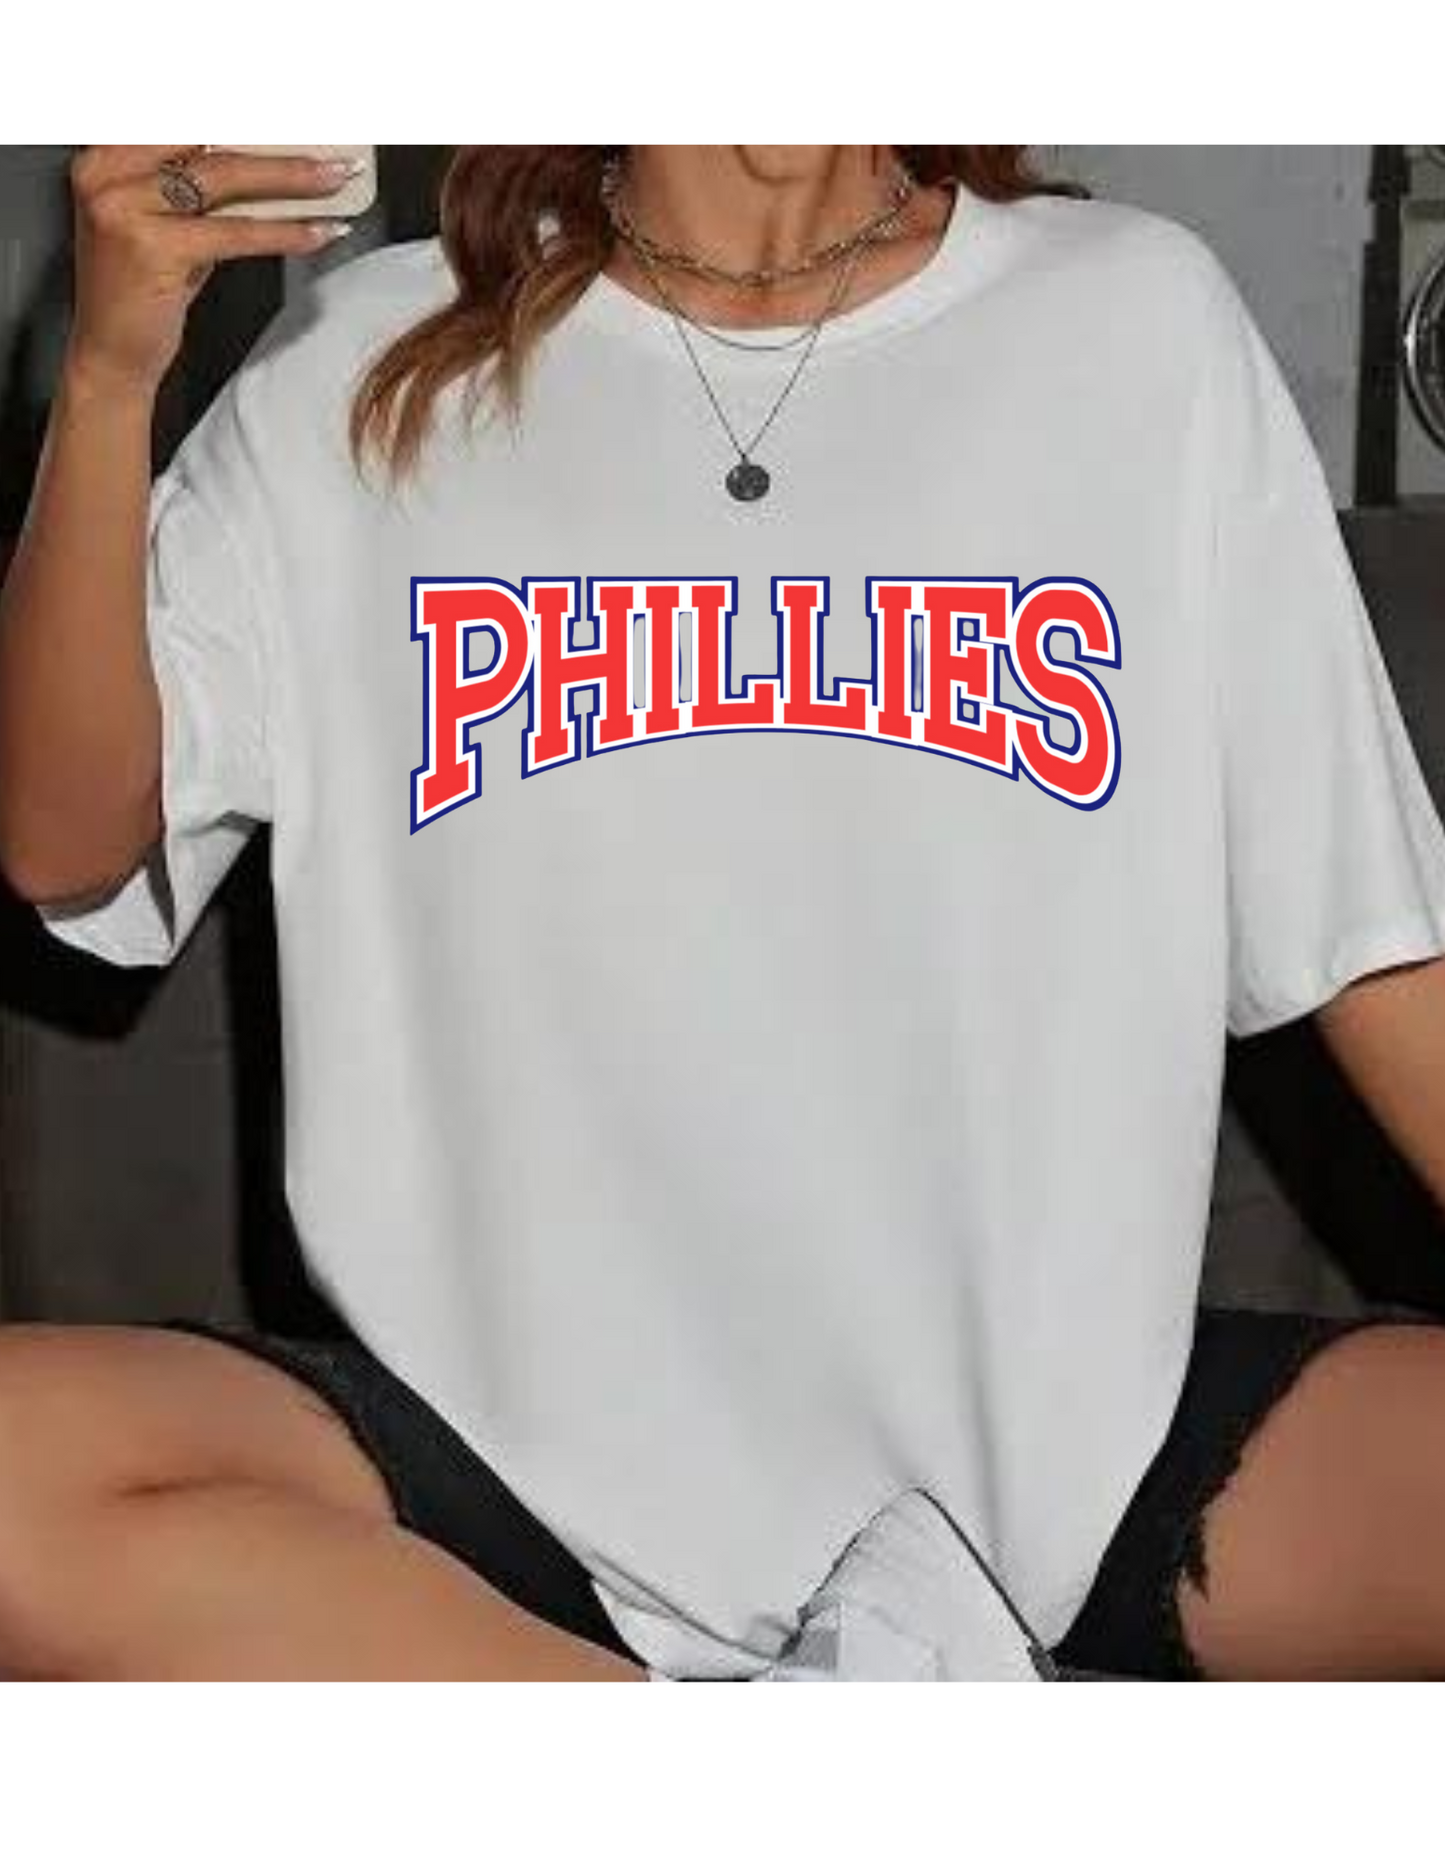 Philadelphia Phillies warp red, white, and blue tee